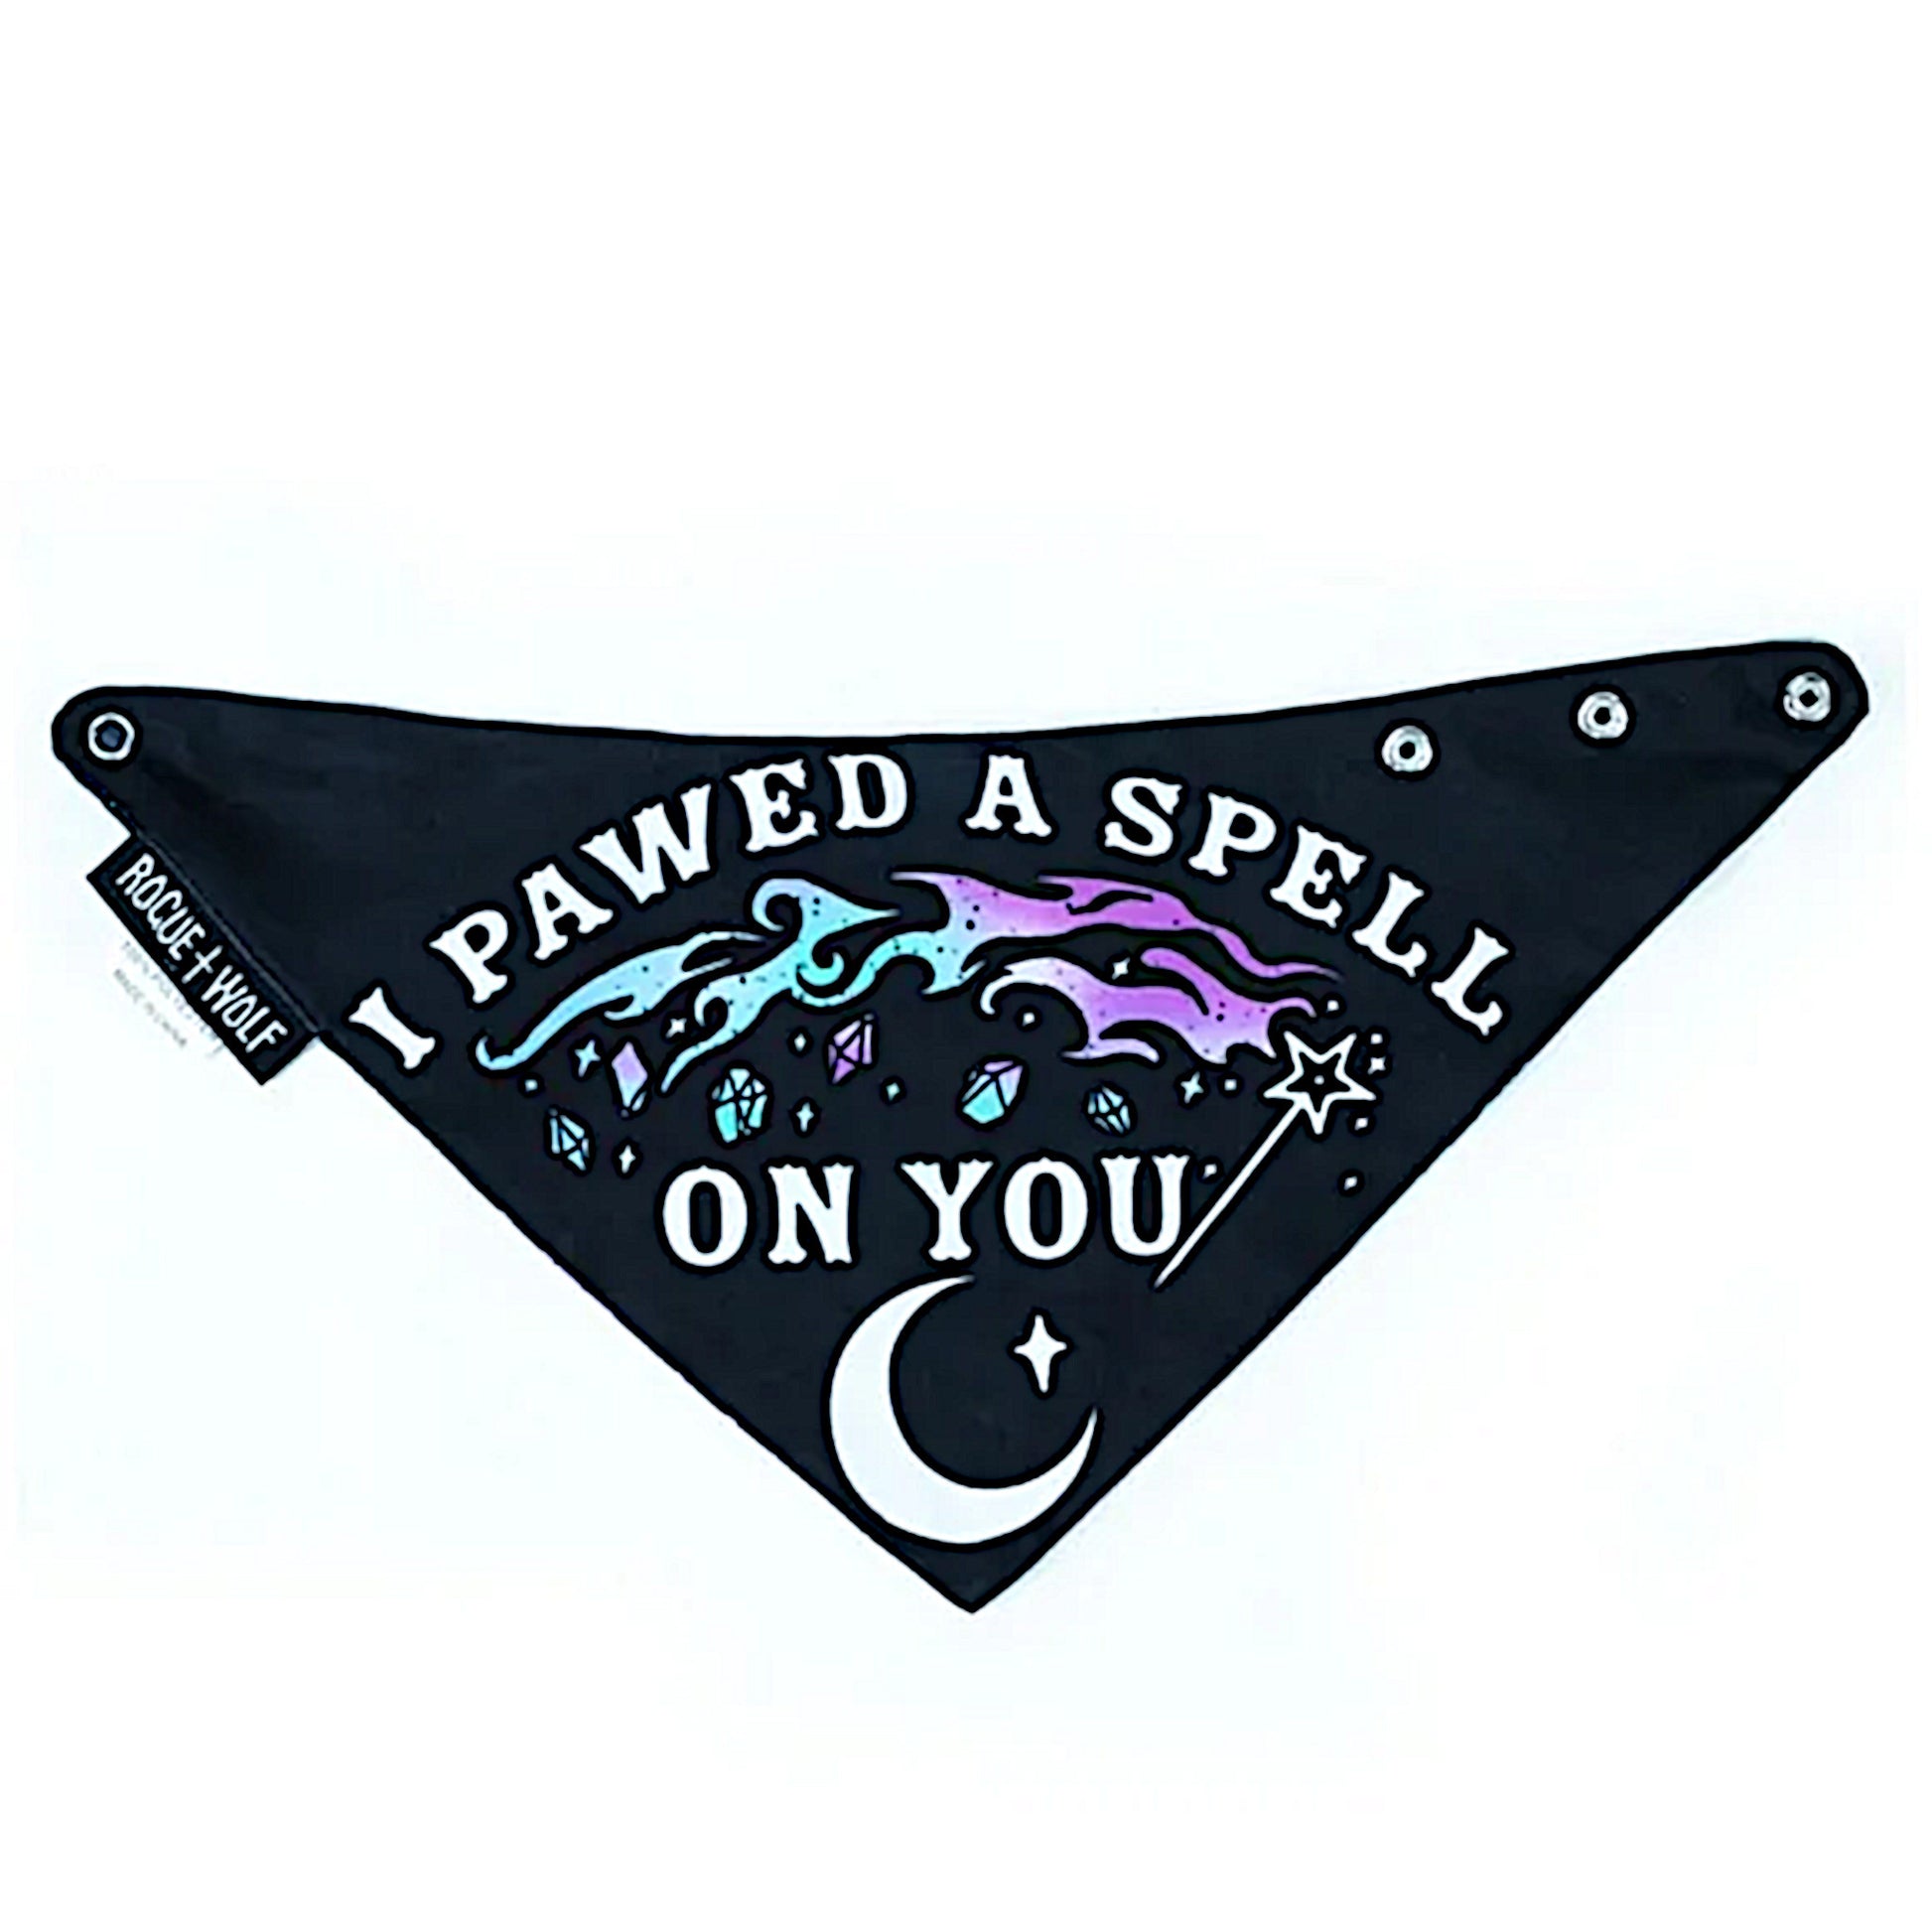 Pet Bandana | I Pawed A Spell On You | Black Purple Adjustable Snaps - Rogue + Wolf - Pet Bandanas